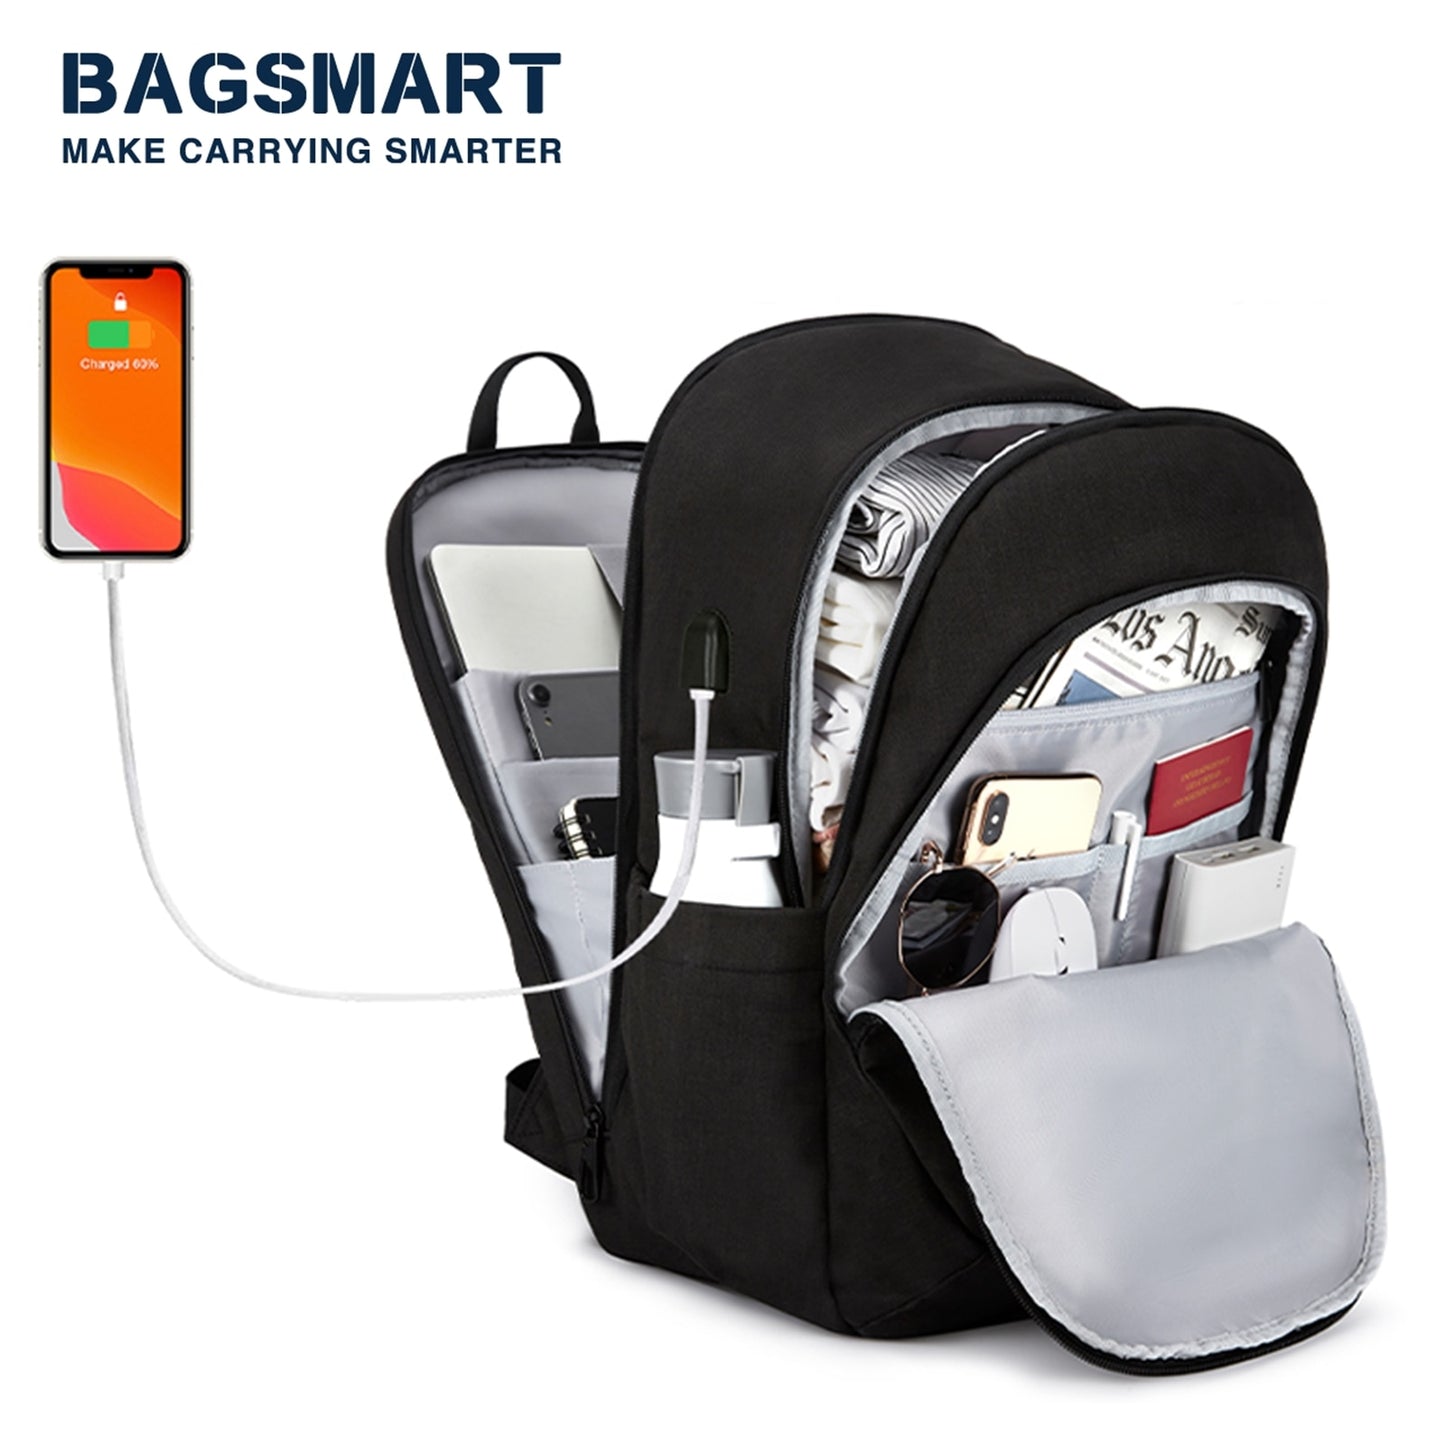 BAGSMART Backpacks for Women College School Bag 17.5’’ /15.6’’ Notebook Travel Laptop Computer Backpack with USB Charging Port